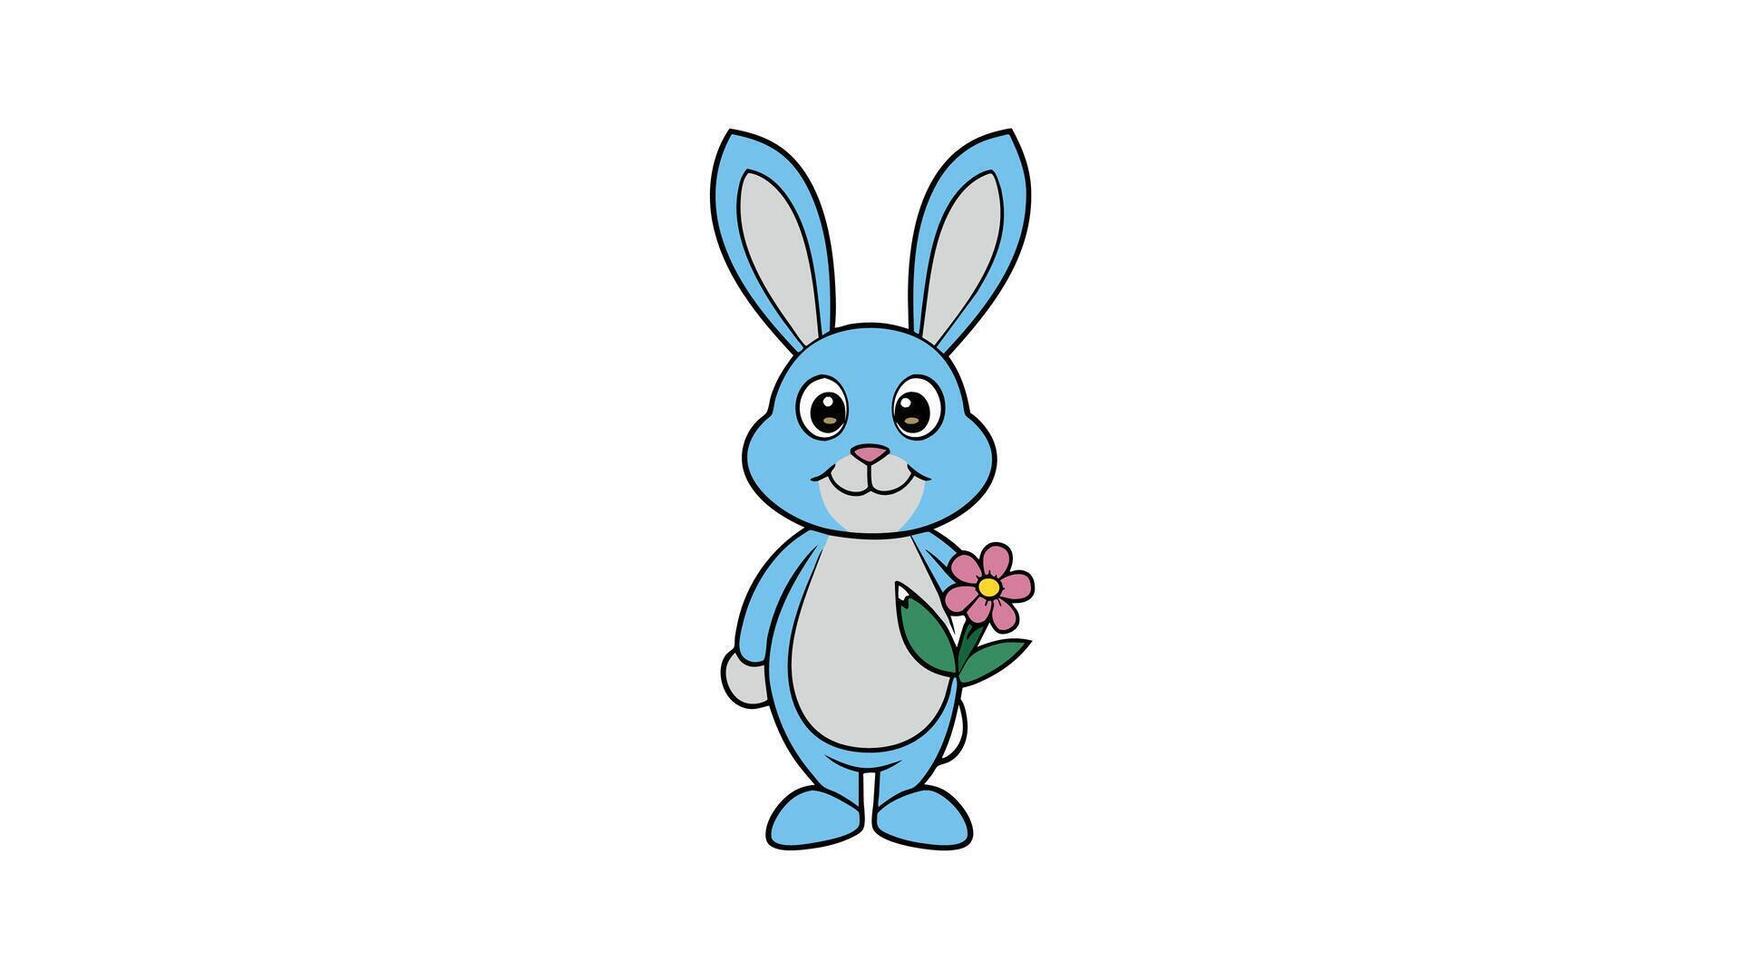 Pascua de Resurrección Conejo participación flor encantador vector ilustración para festivo diseños